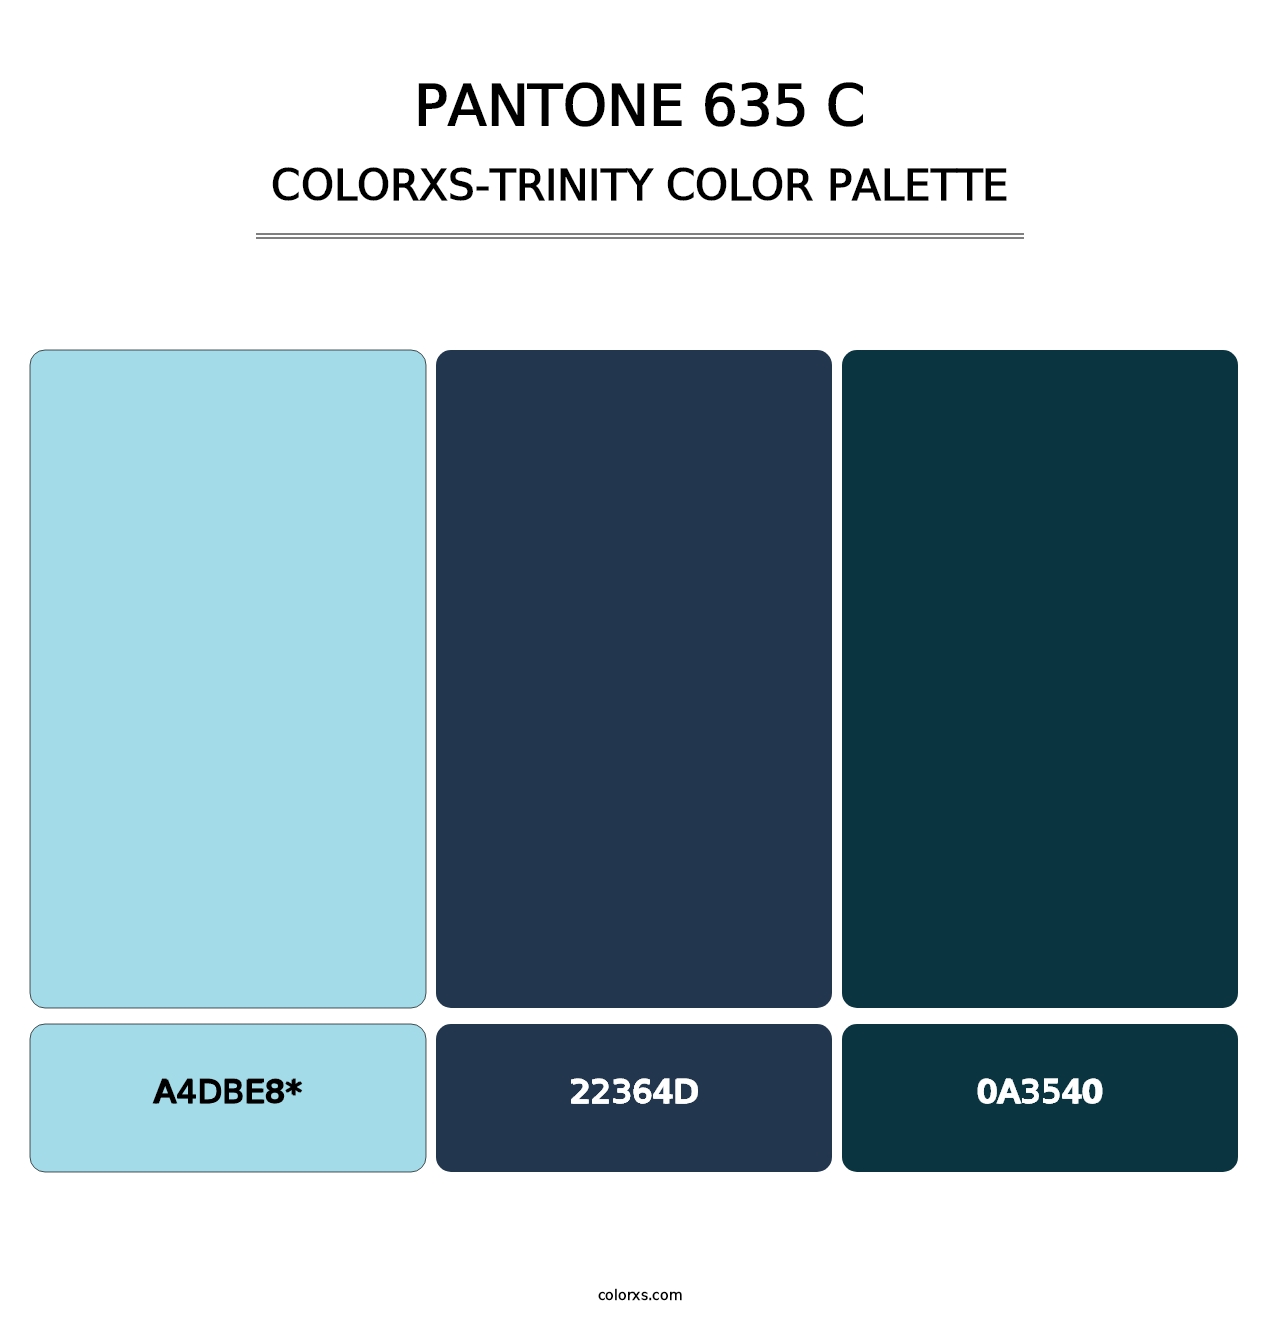 PANTONE 635 C - Colorxs Trinity Palette